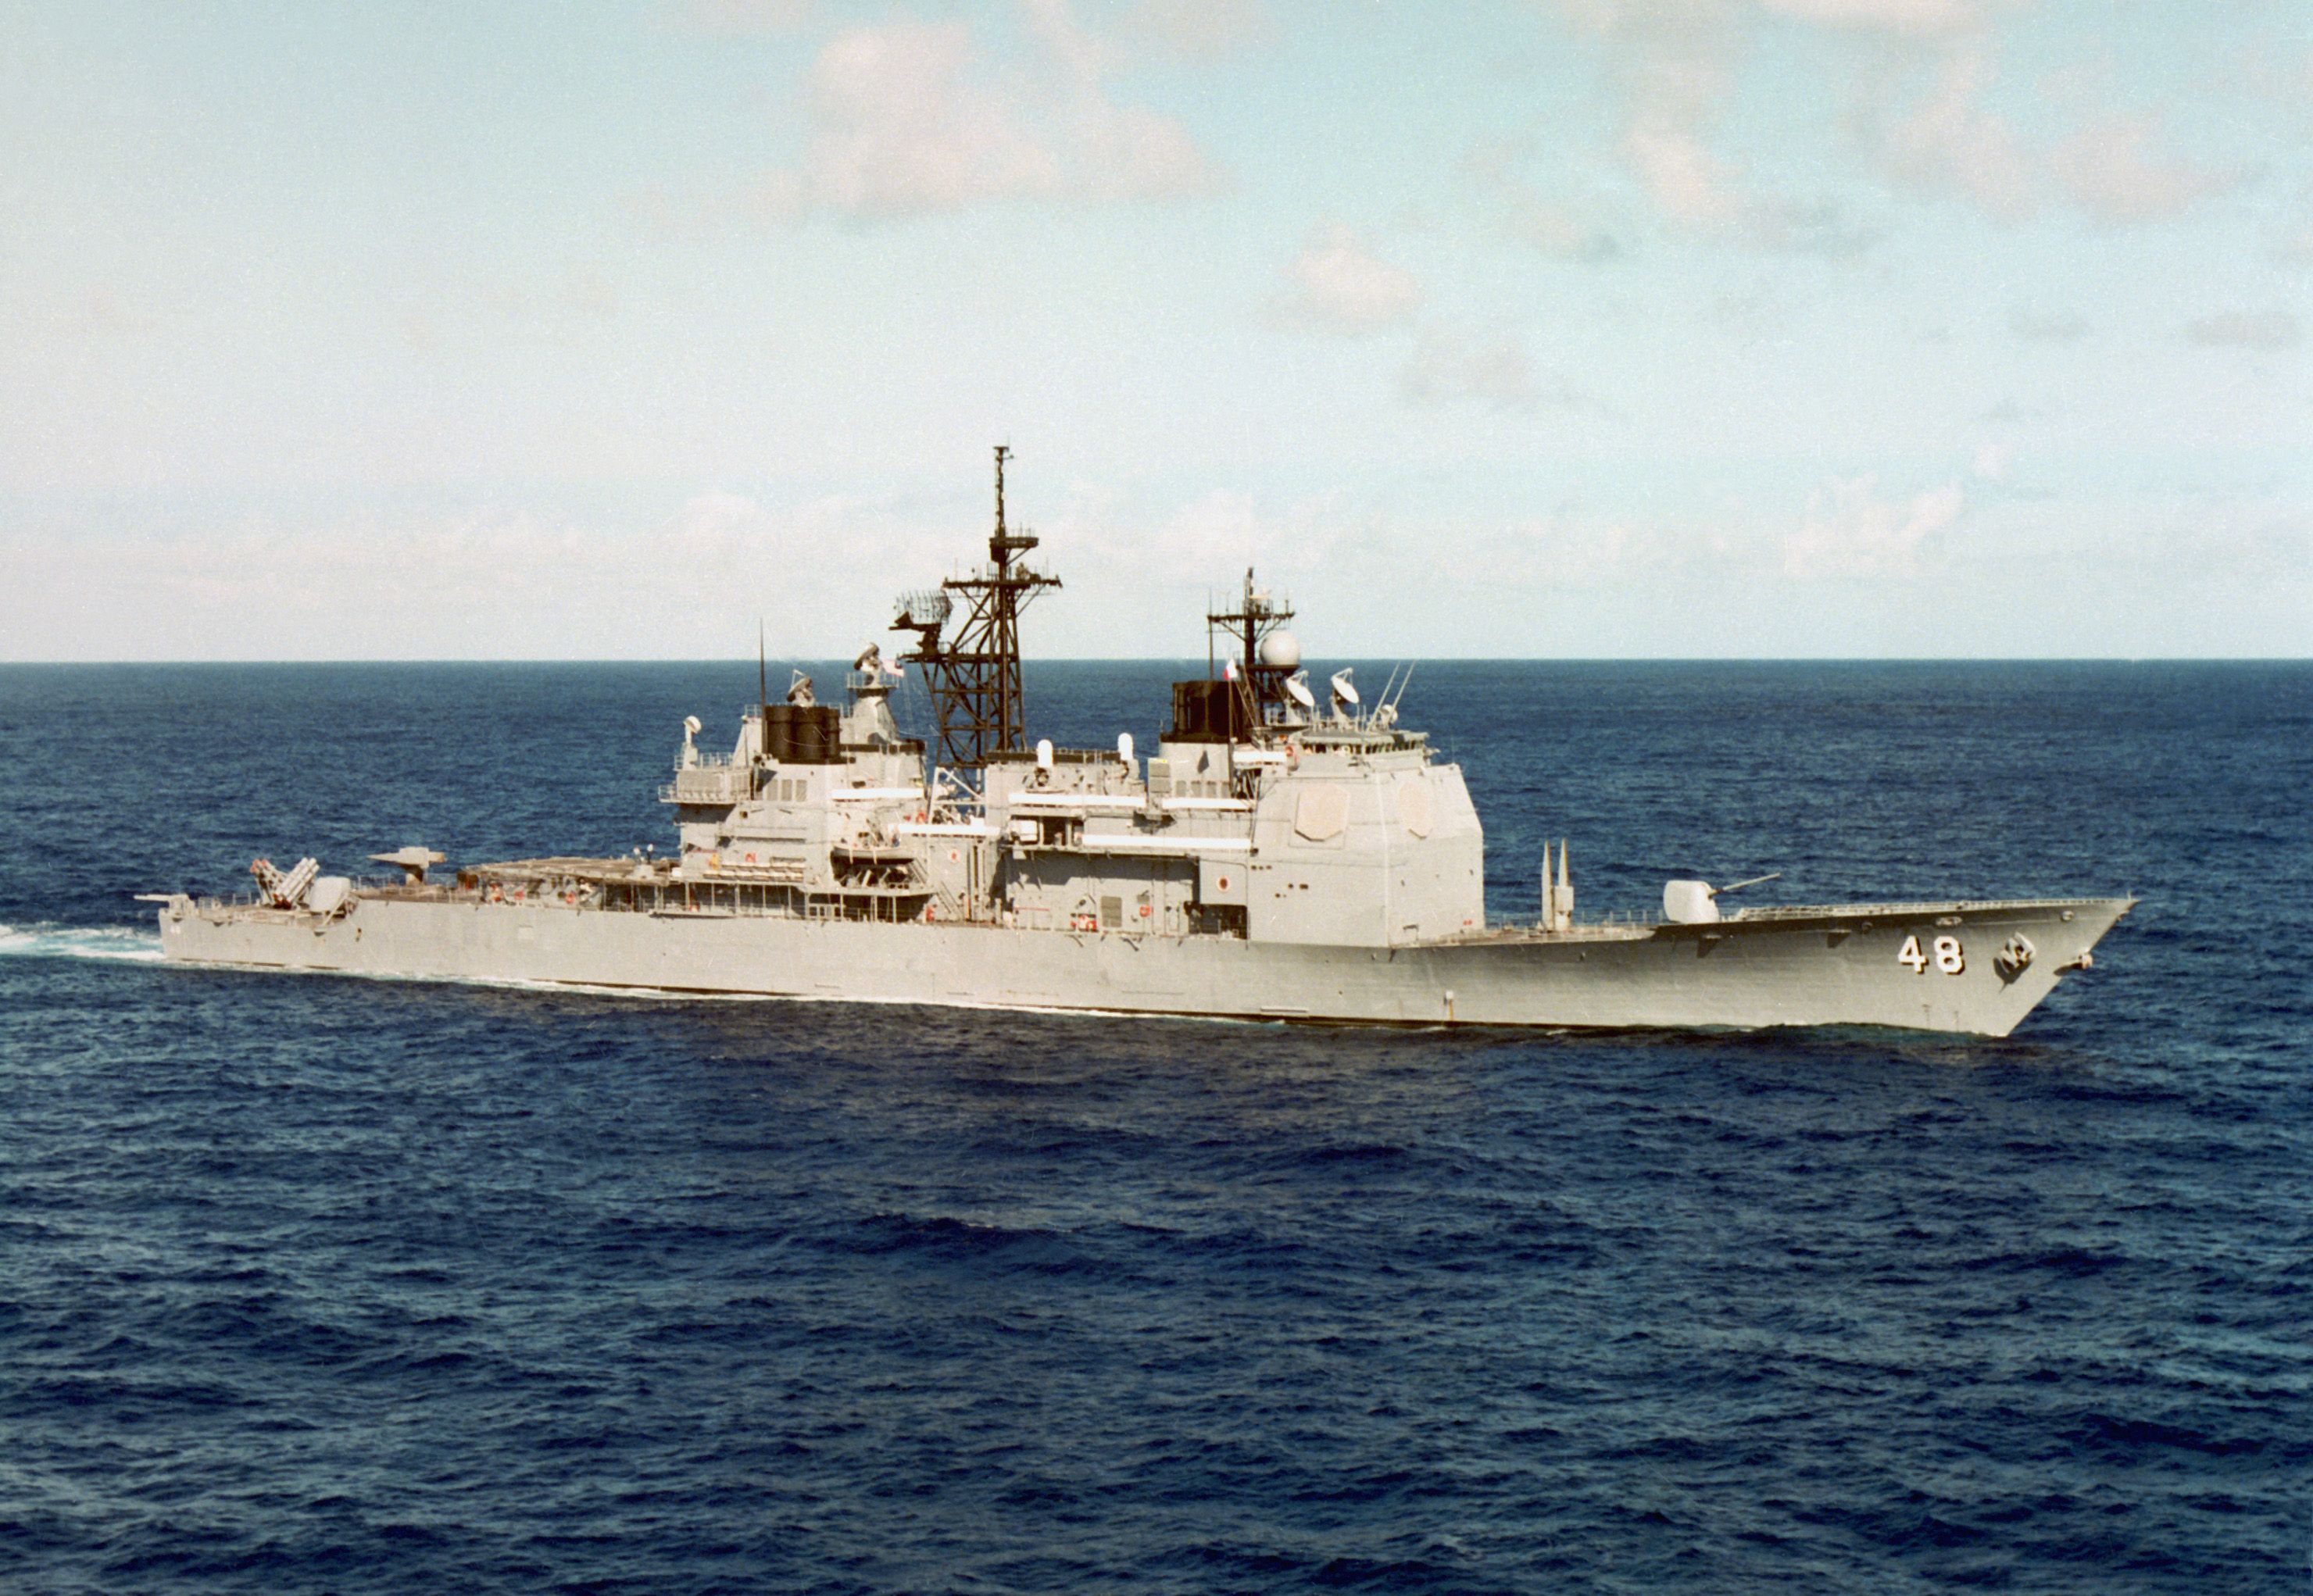 Starboard_bow_view_of_USS_Yorktown_(CG-48)_underway_in_Caribbean_c1985.jpg